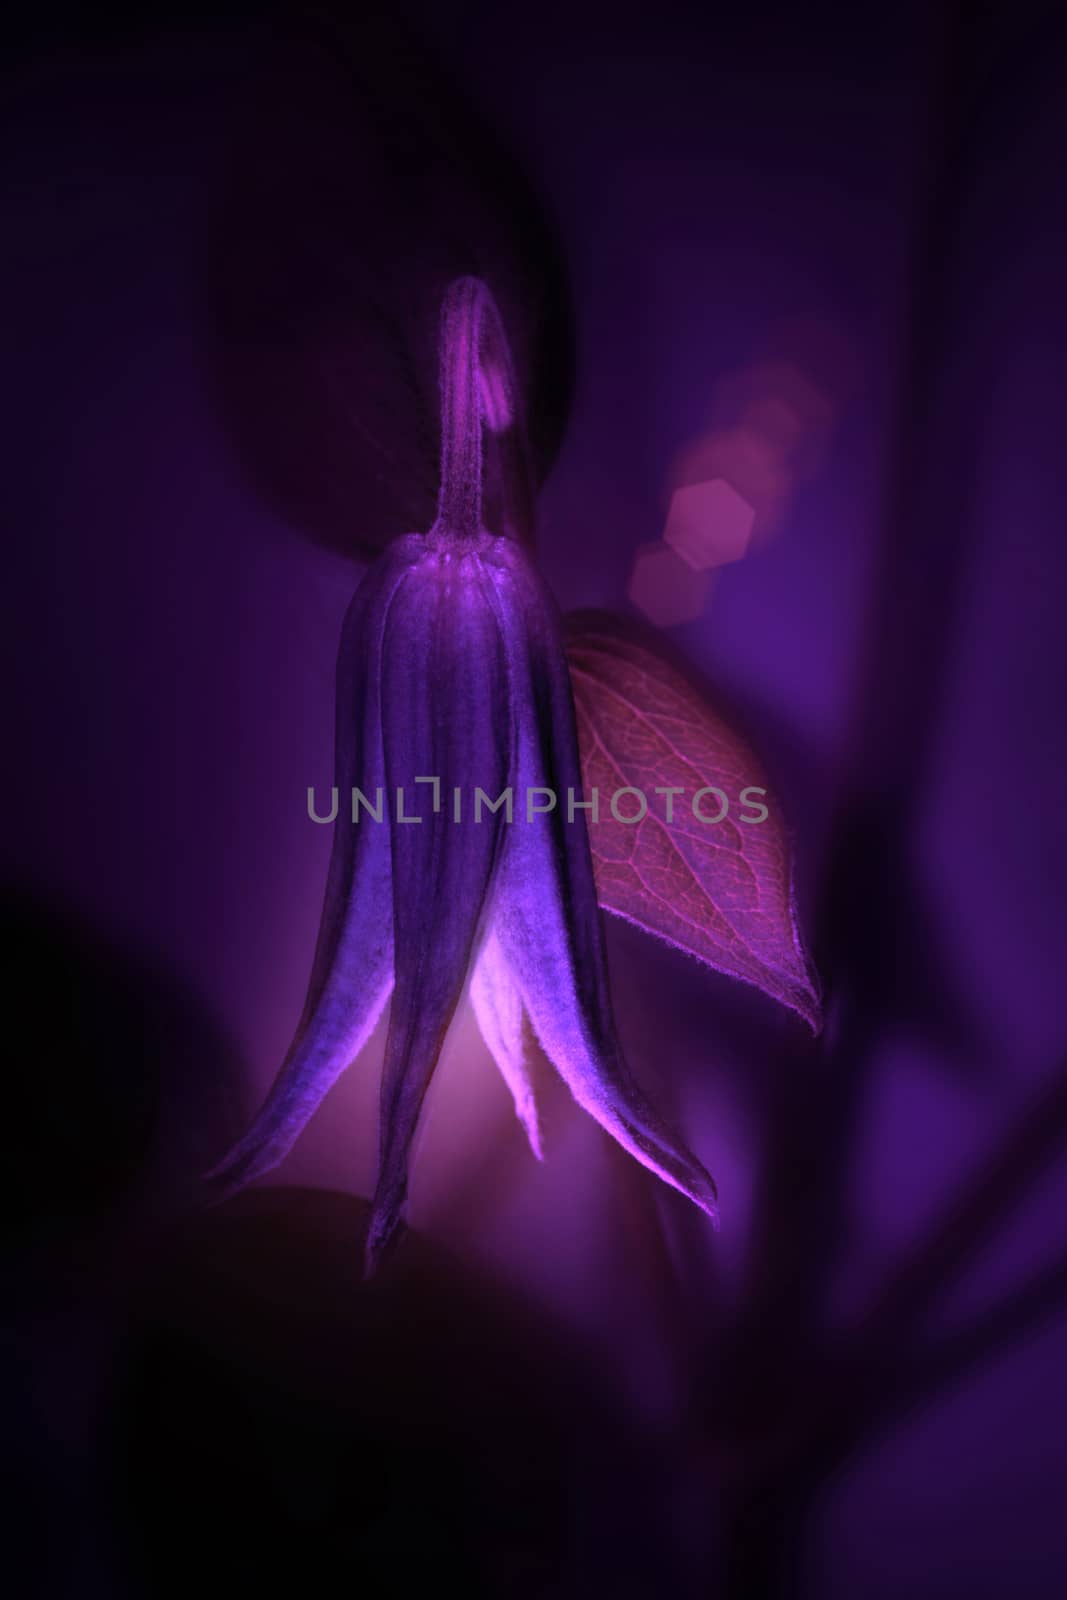 one purple flower close-up on a dark background